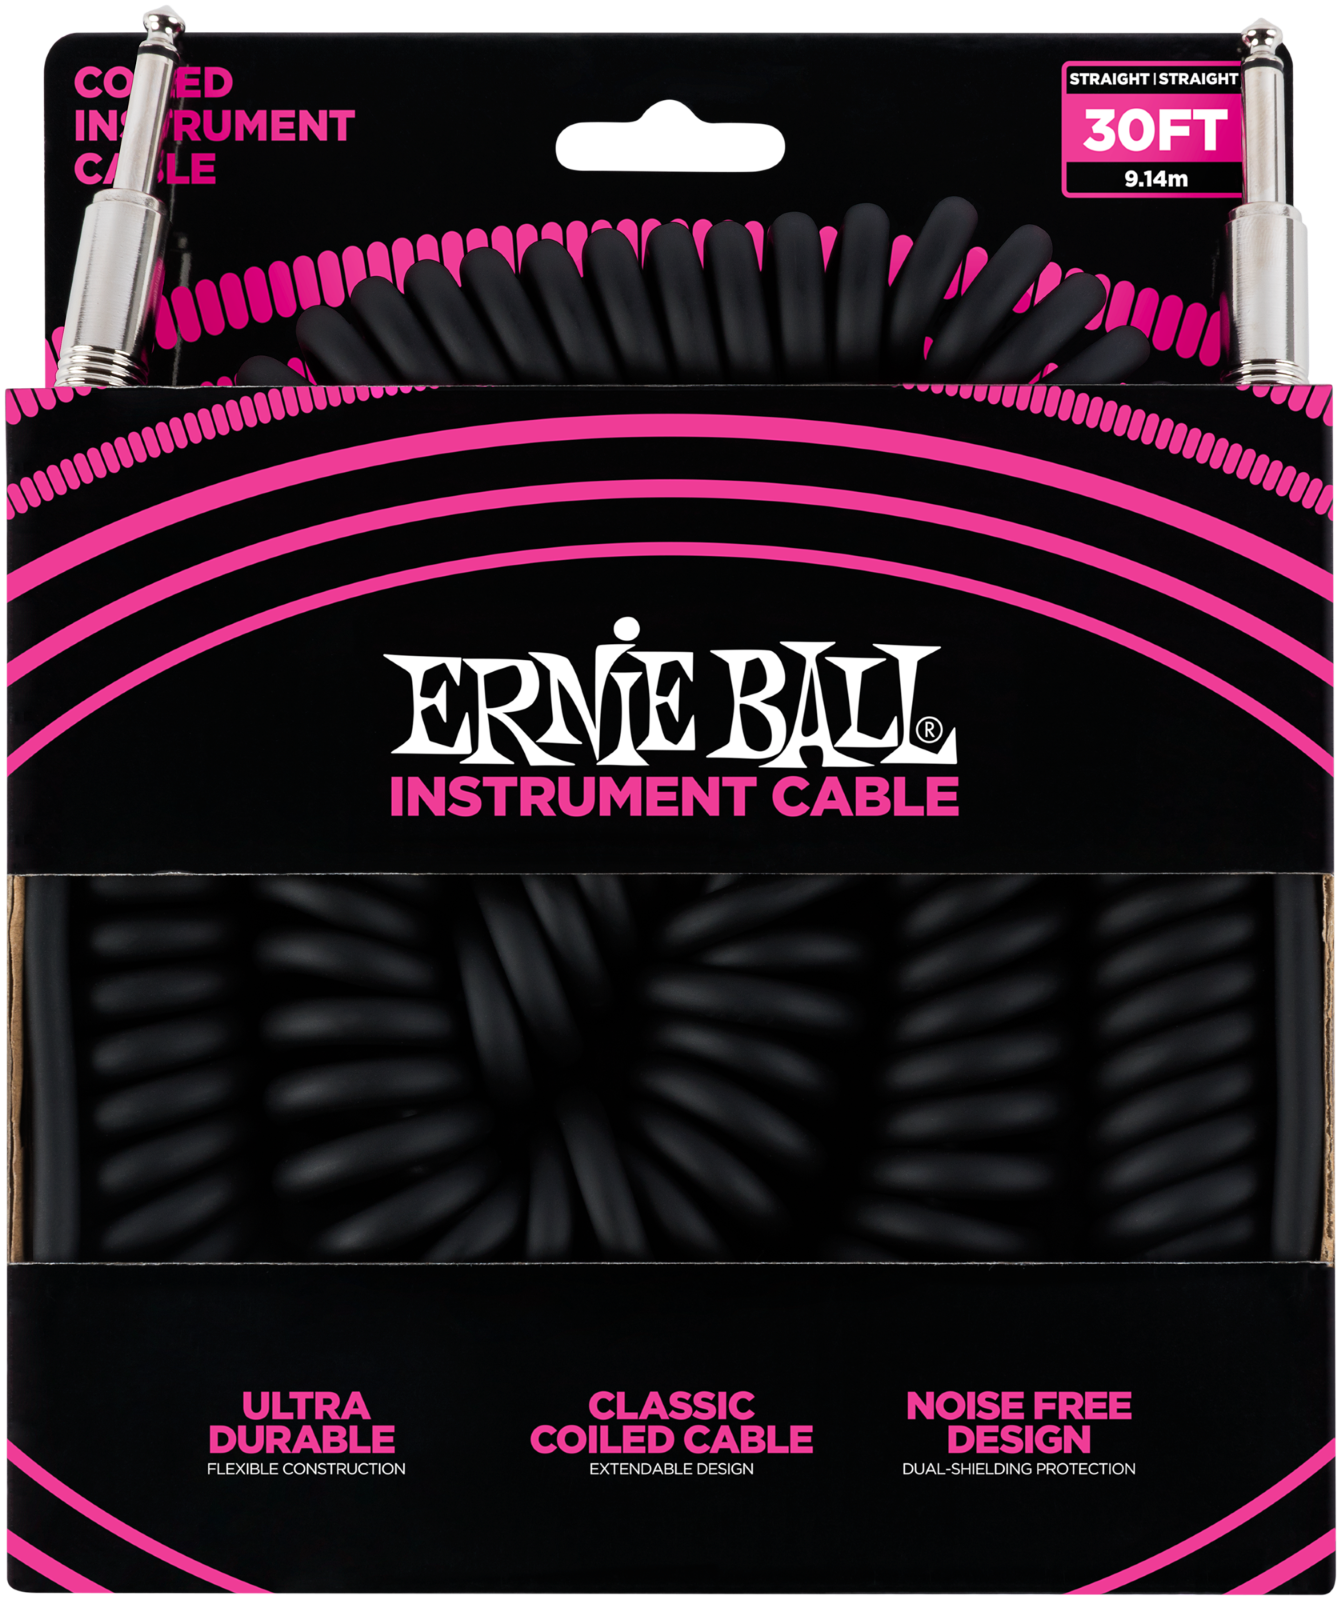 Ernie Ball Spiral Cable Straight / Straight, Black, 9.14m : photo 1